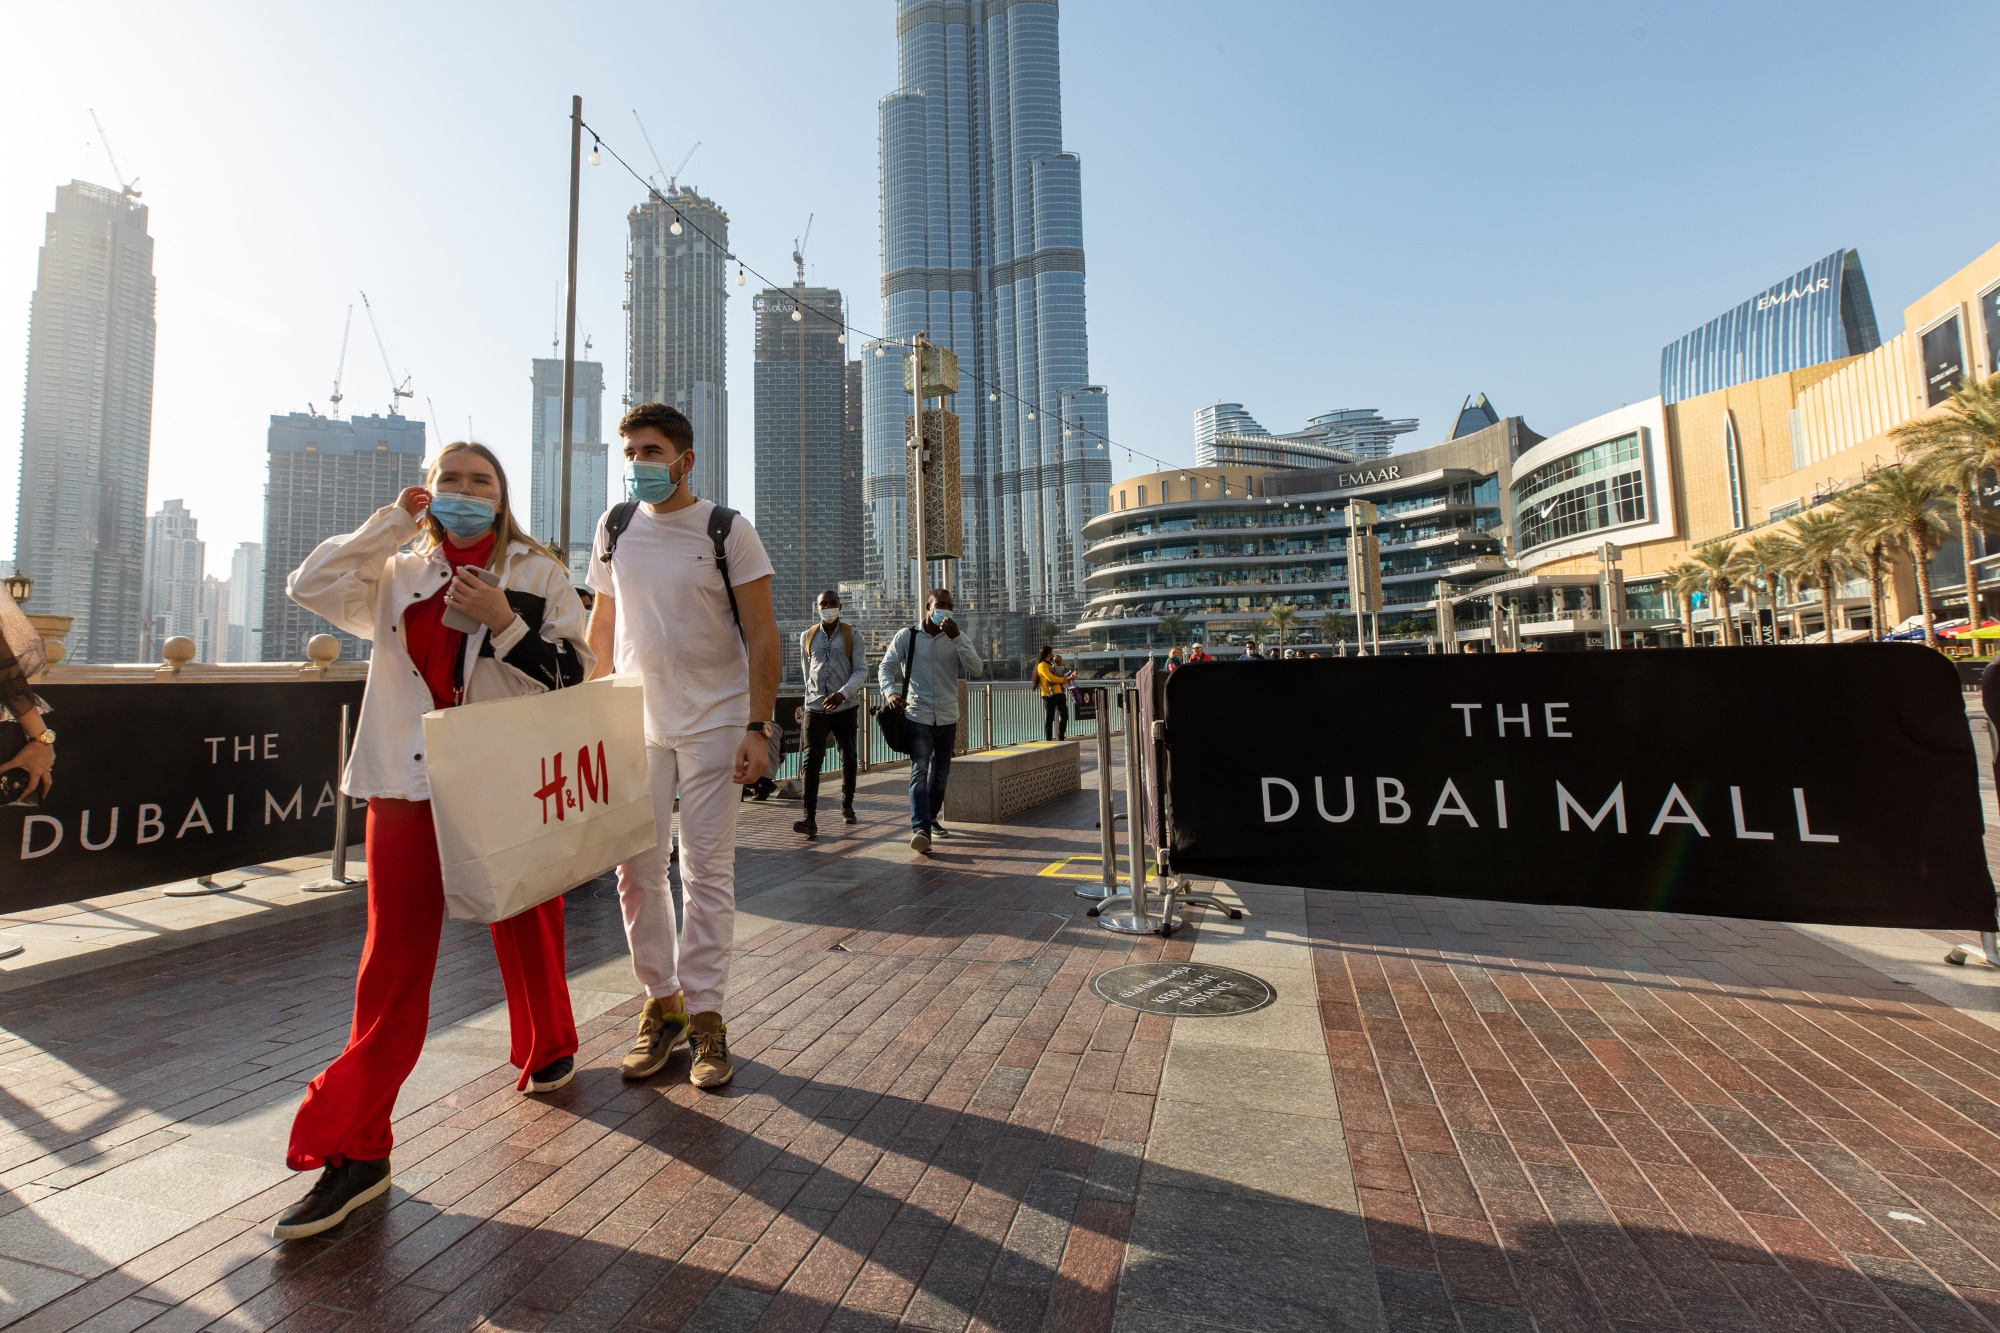 Shoppers near the Dubai Mall and the Burj Khalifa skyscraper in Dubai, on Jan. 27.